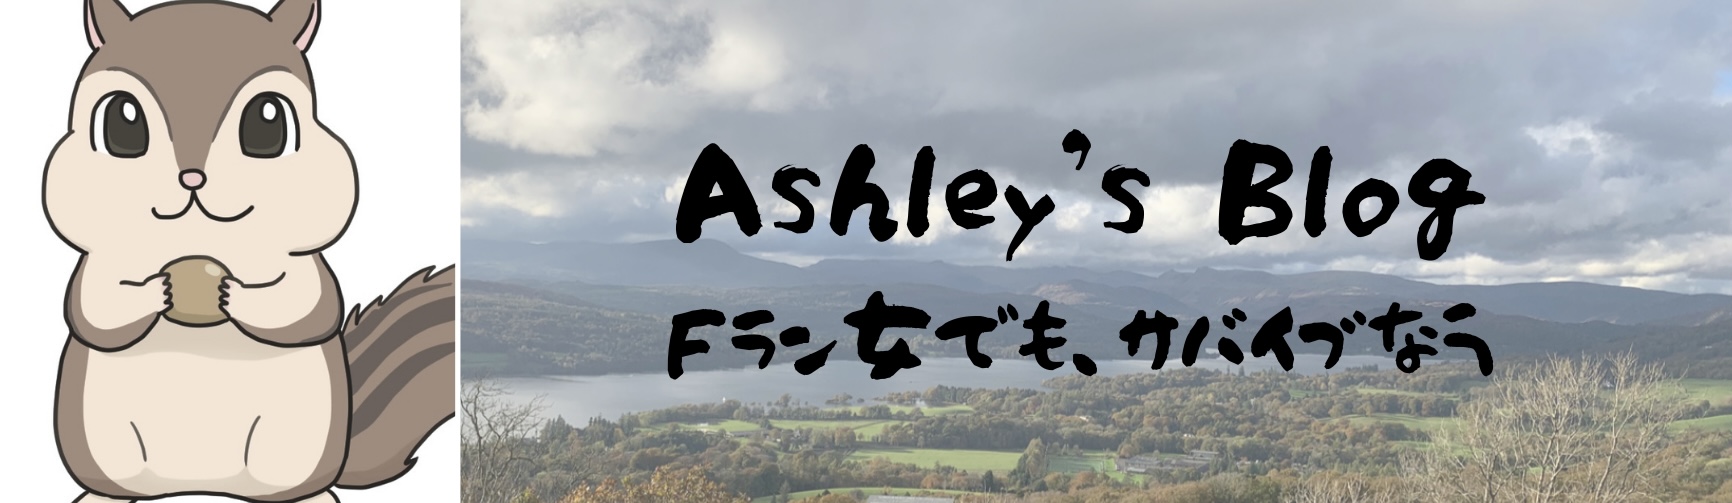 Ashley's Blog （アシュリーブログ）